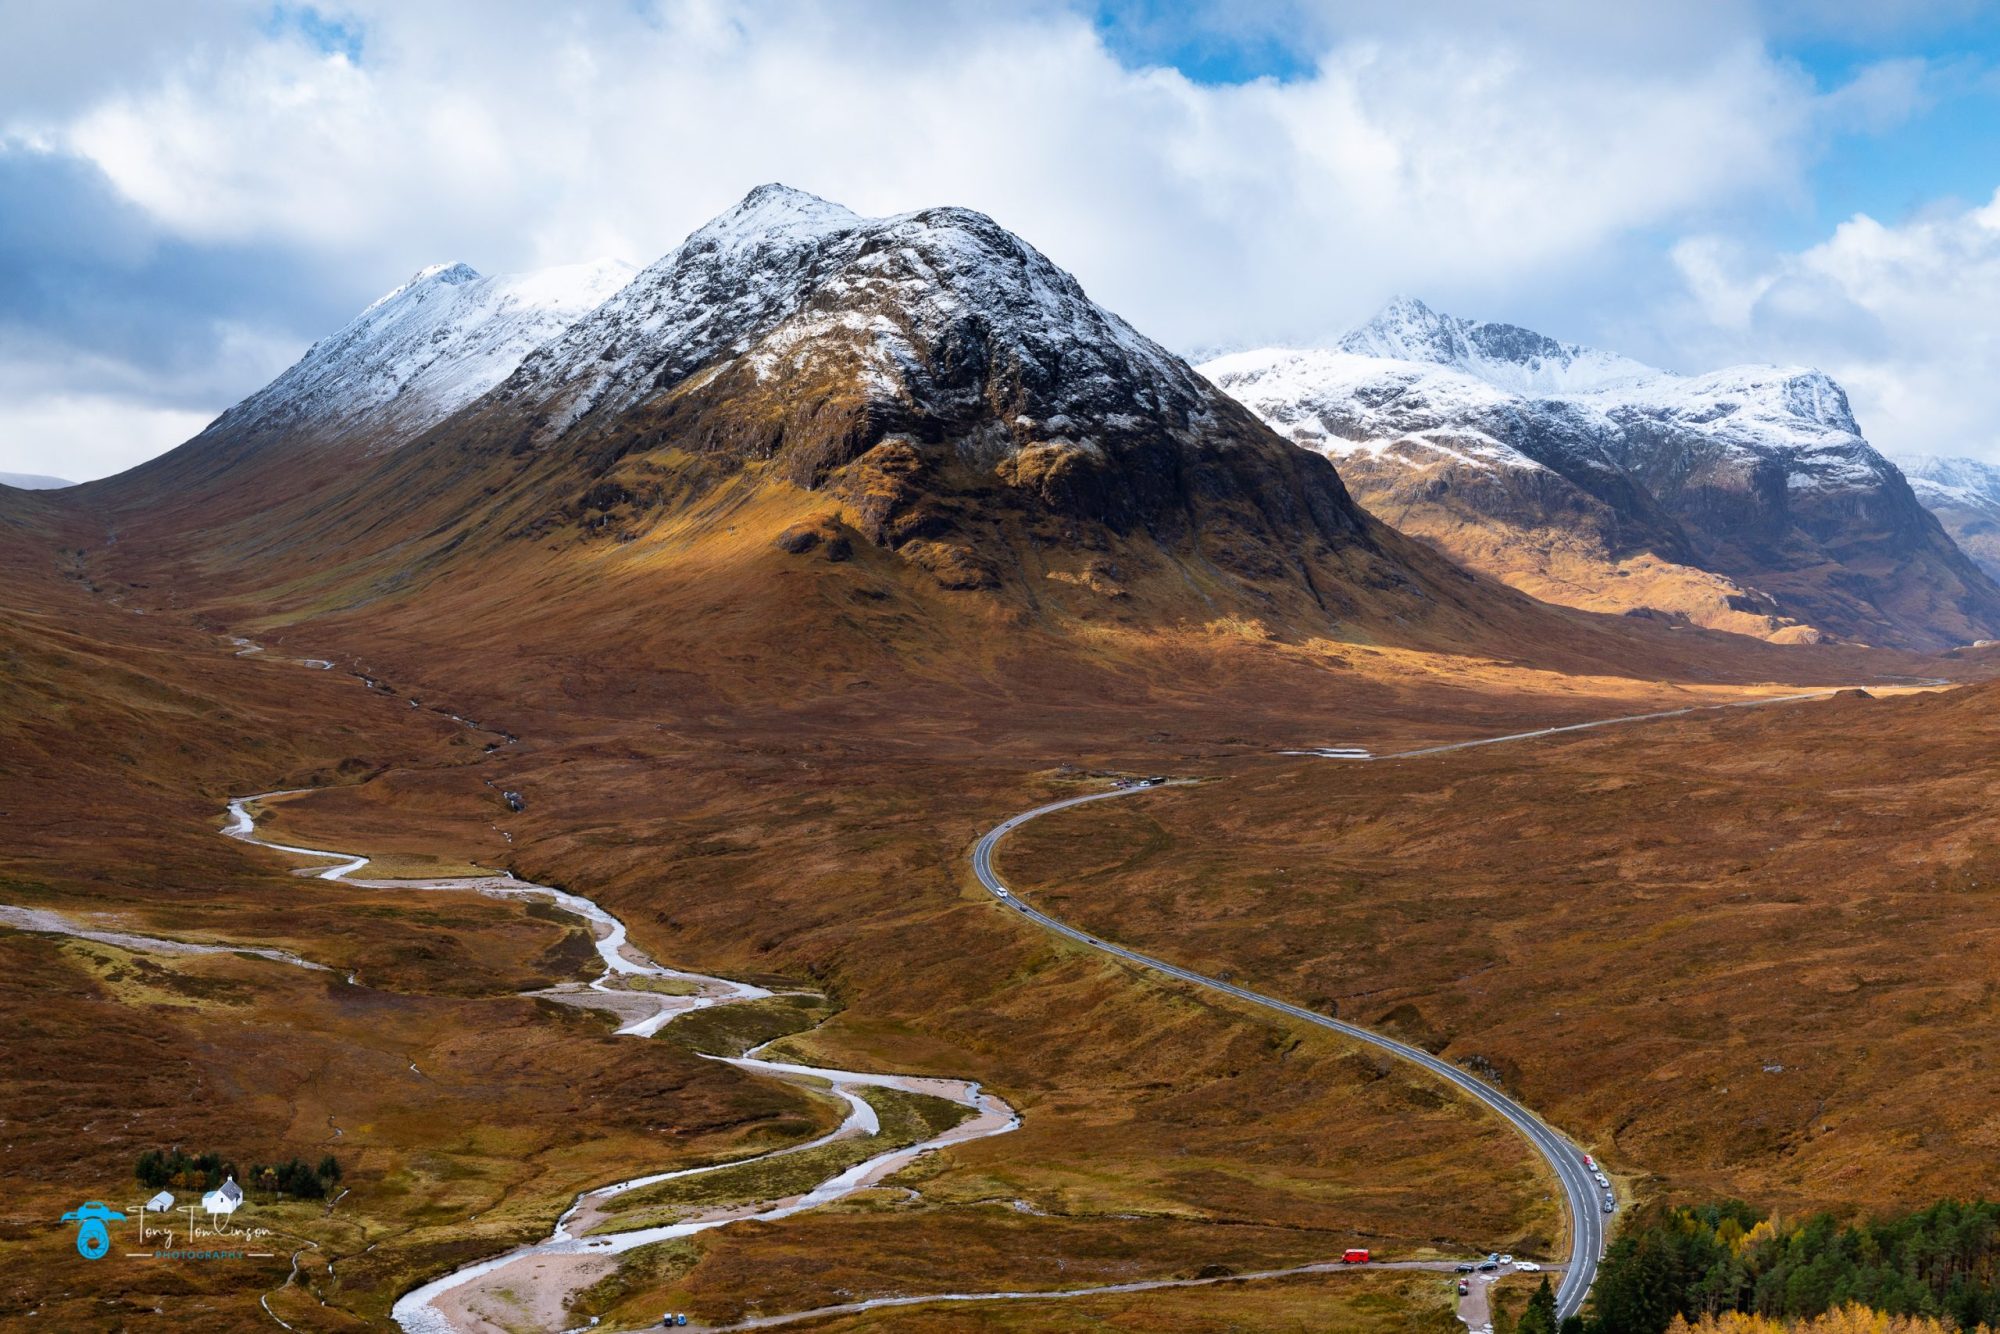 tony-tomlinson-photography-gearr-aonach-glencoe-scotland-mountains-valley-landscape-2000x1334